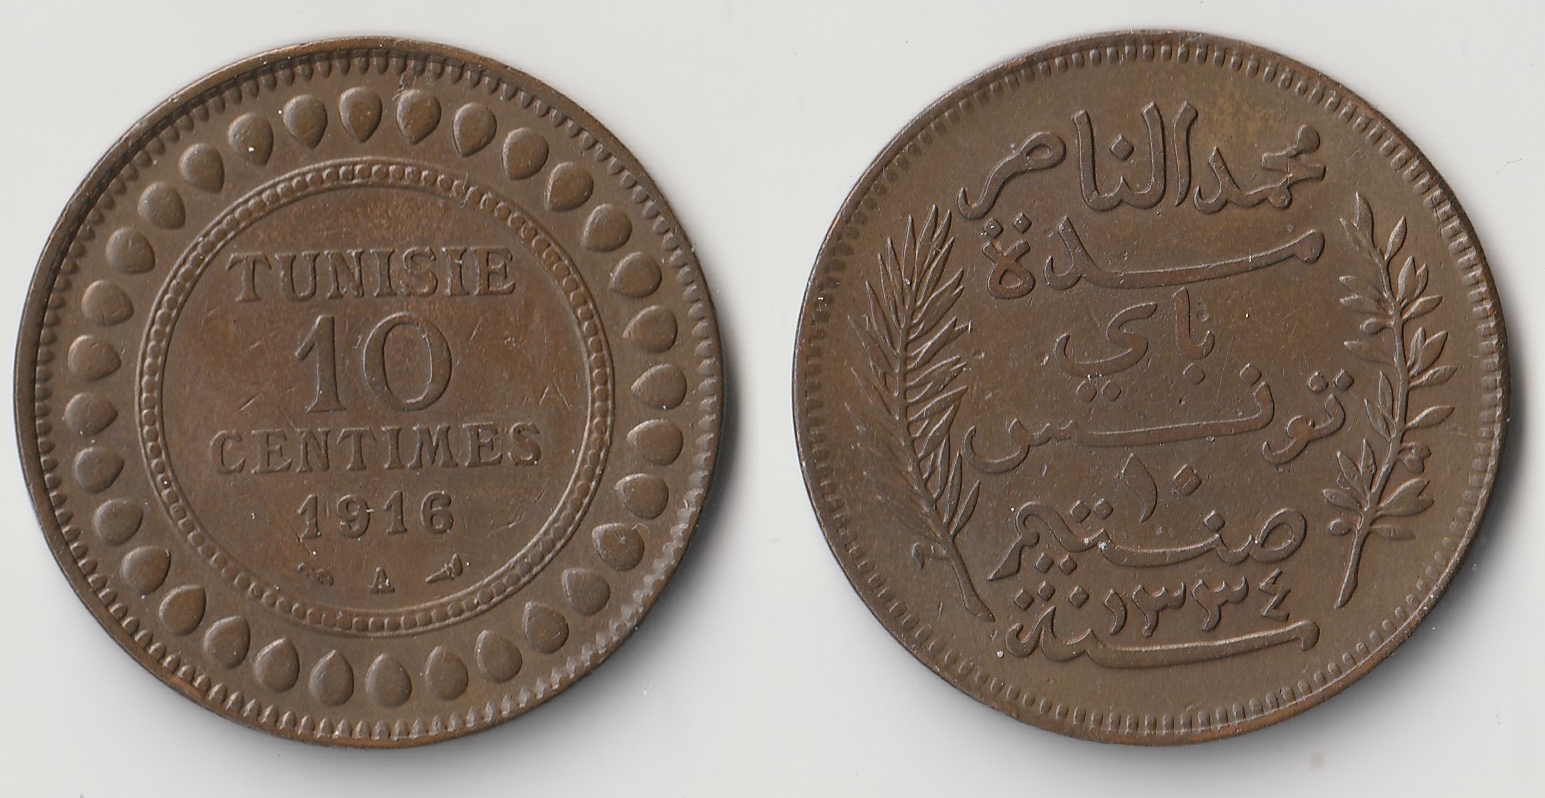 1916 tunisia 10 centimes.jpg